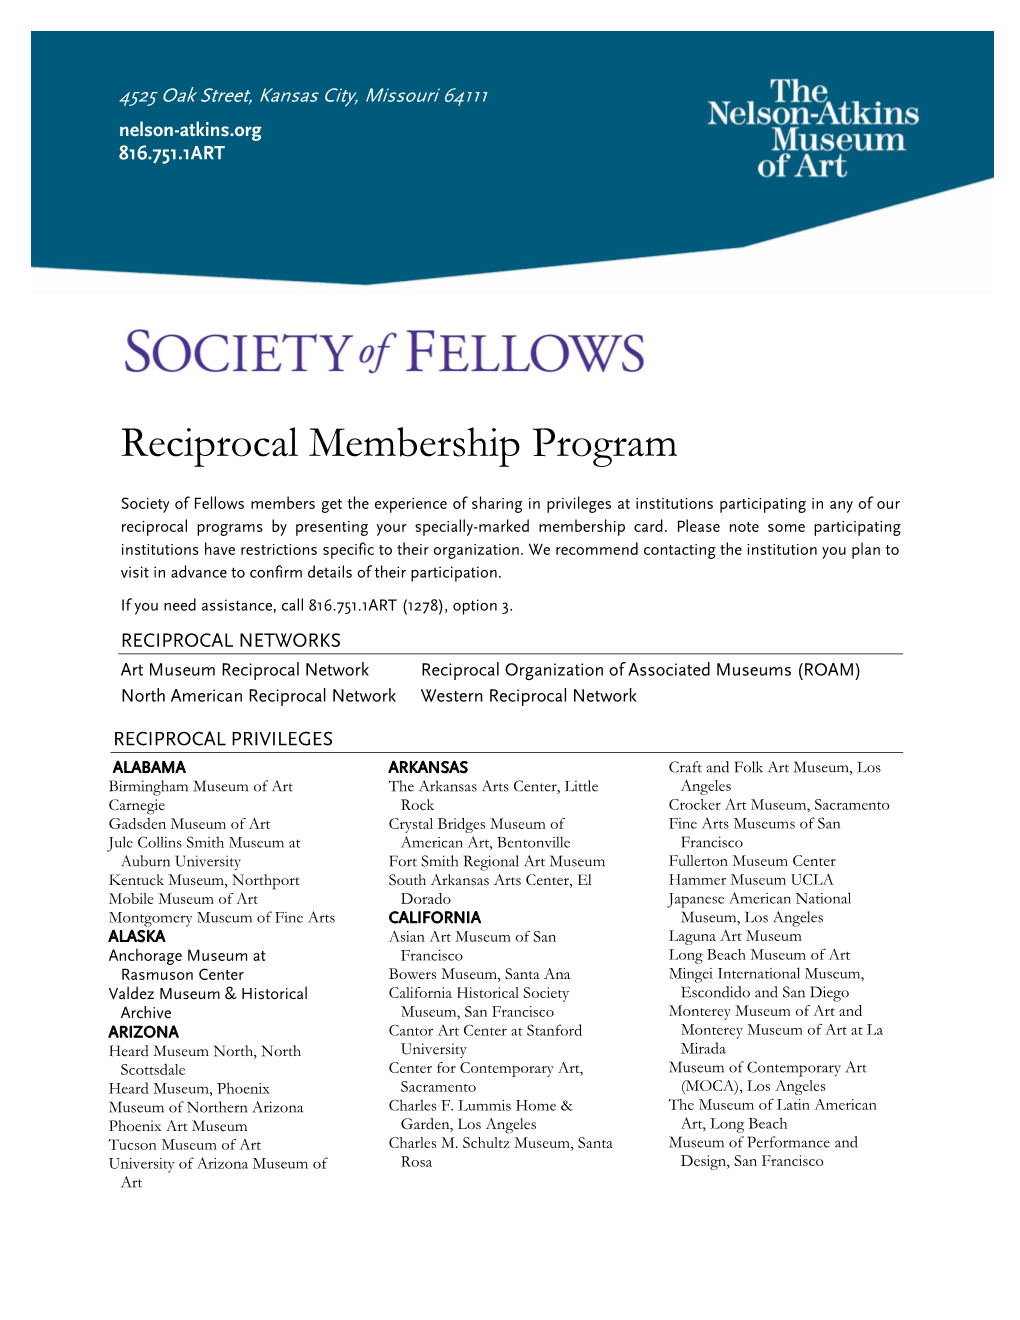 Reciprocal Membership Program